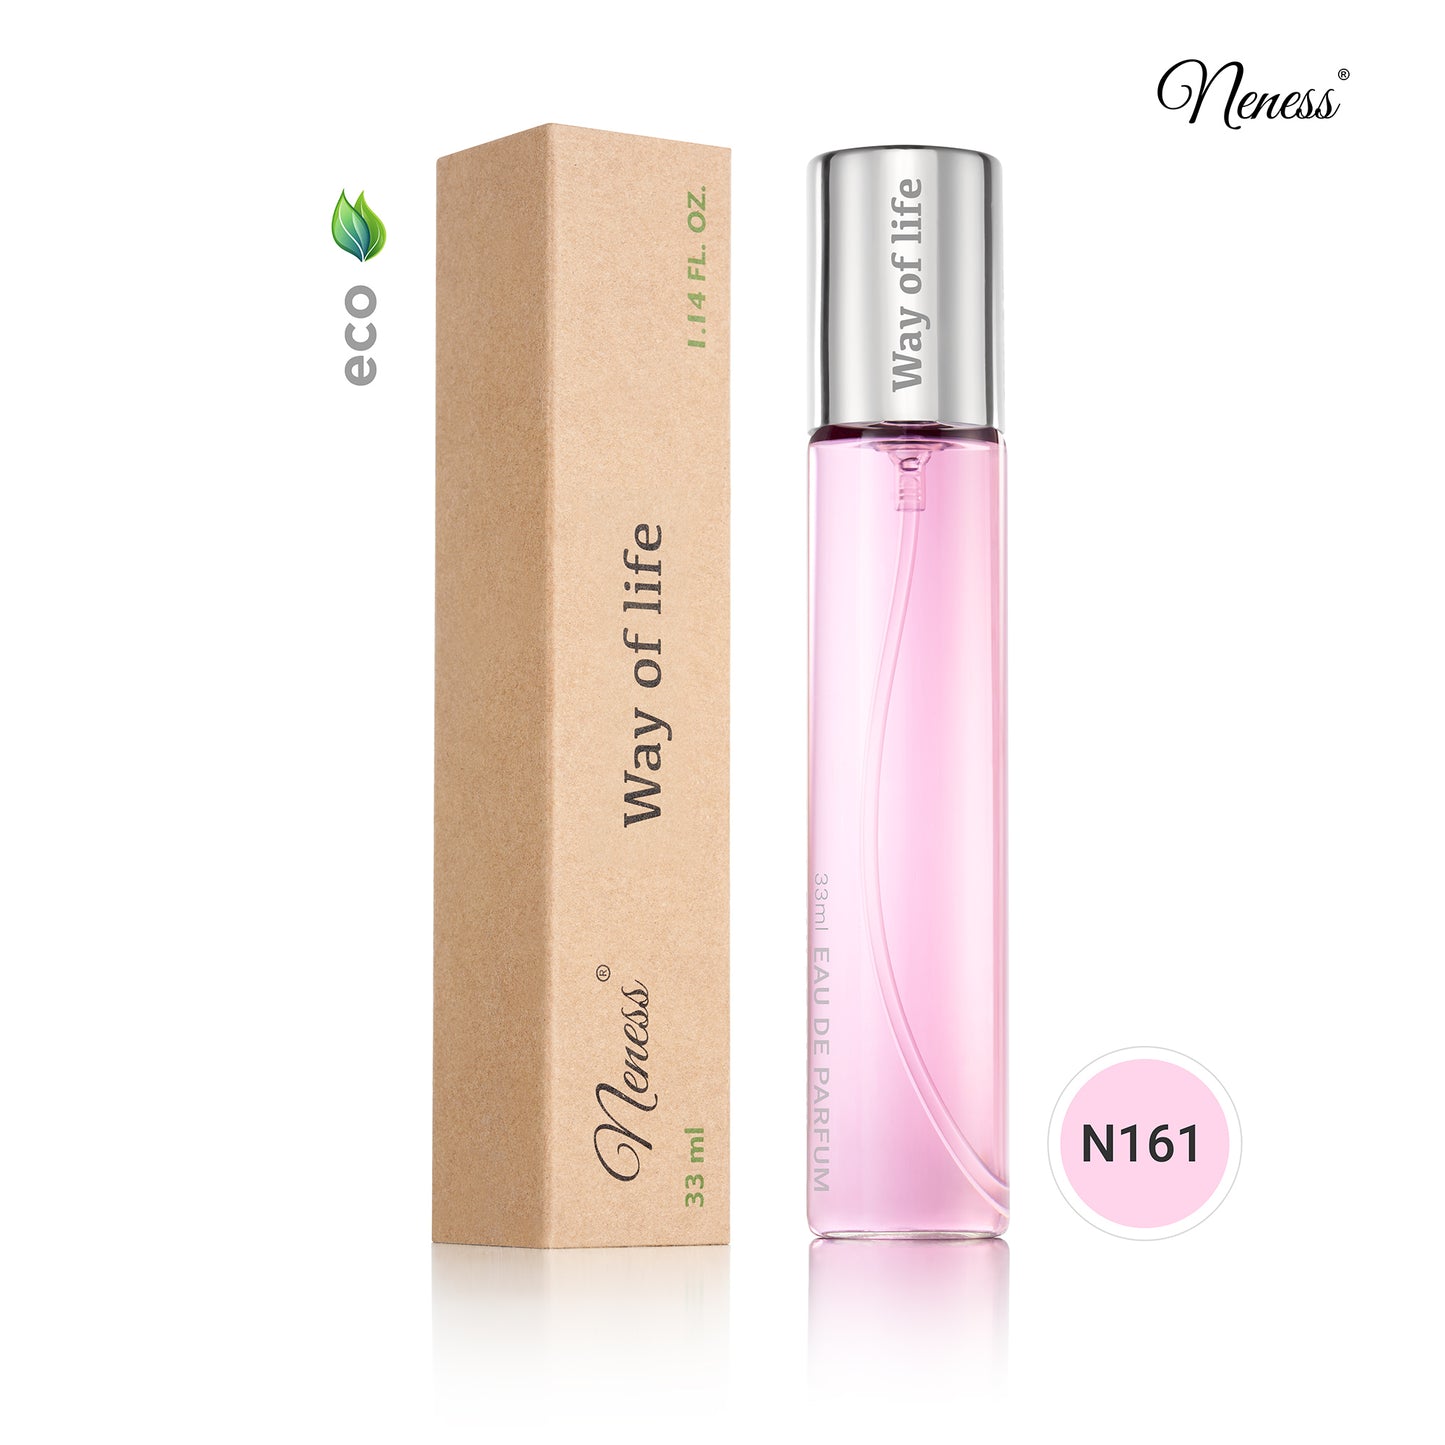 N161. Neness Way Of Life - 33 ml - Perfume For Women